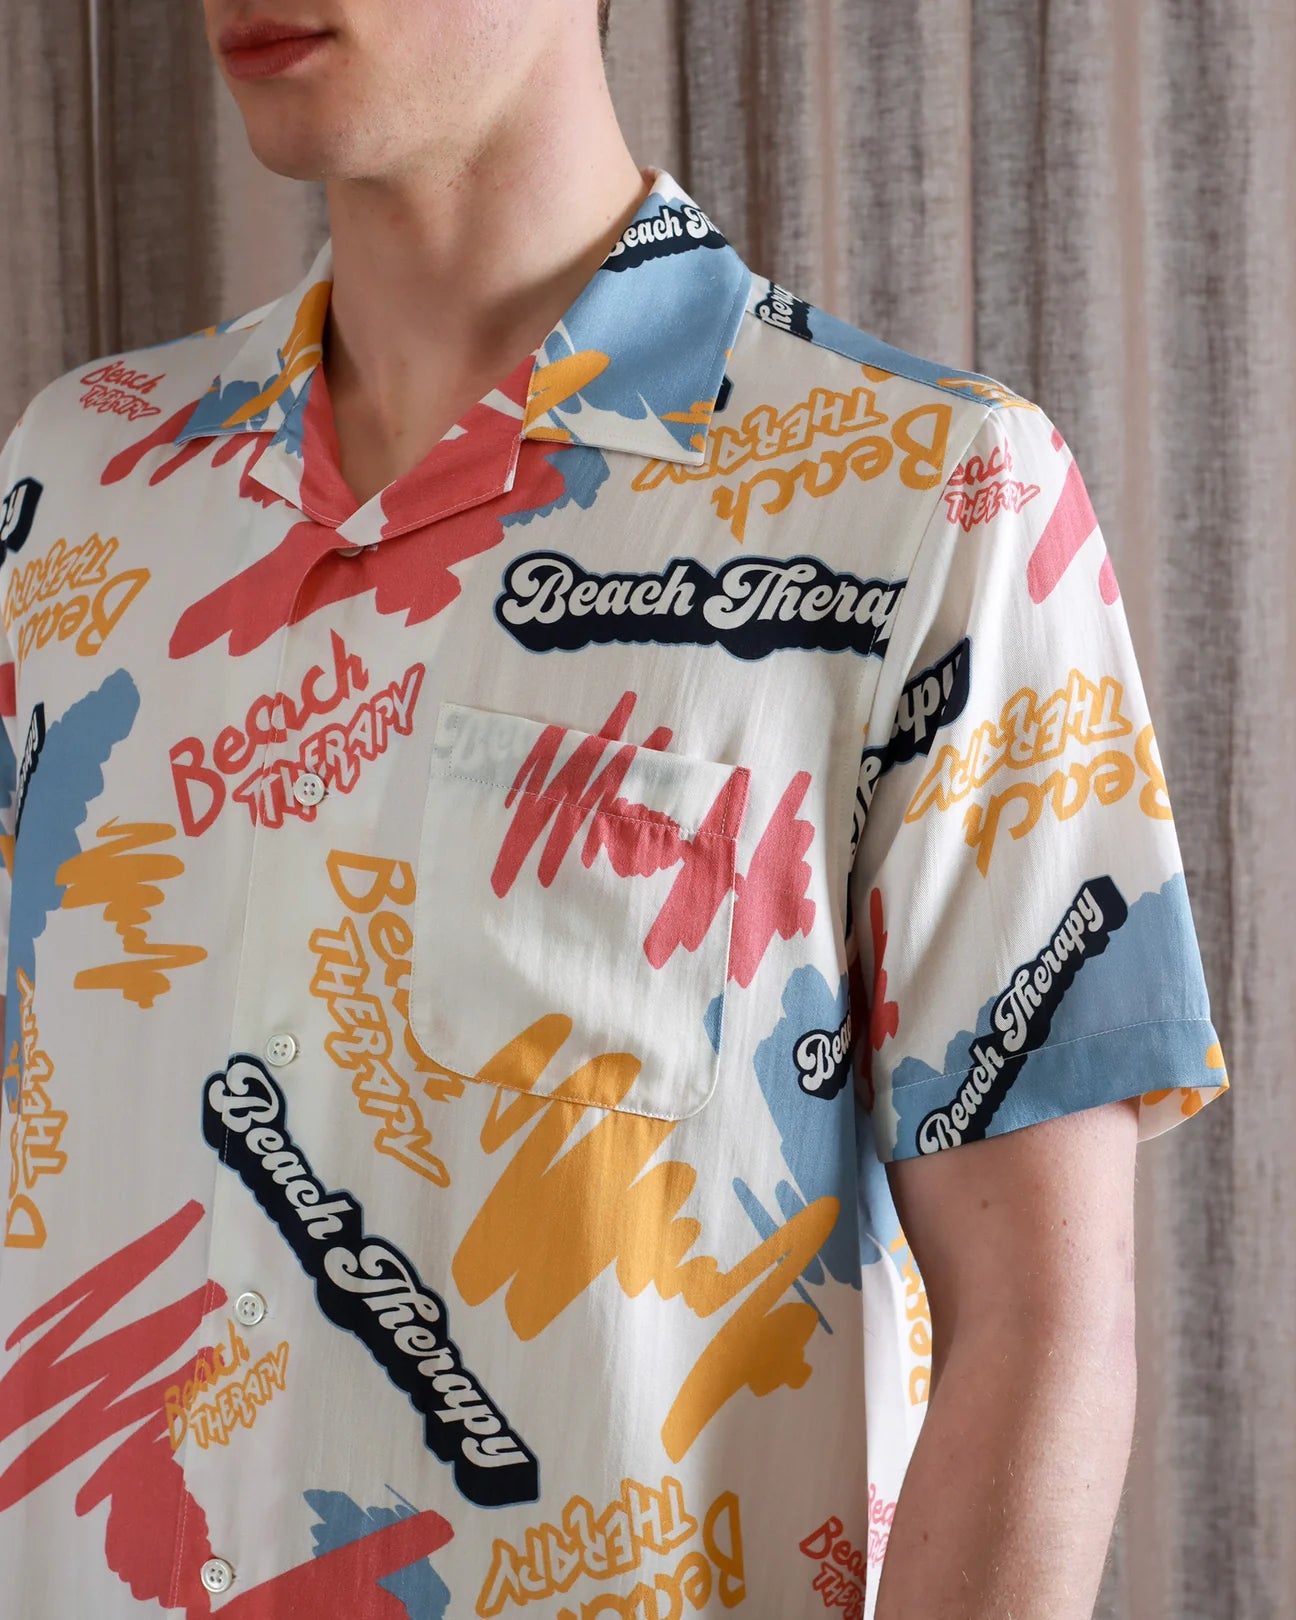 Far Afield - Stachio Shirt - Multi Colour Beach Therapy Print - City Workshop Men's Supply Co.